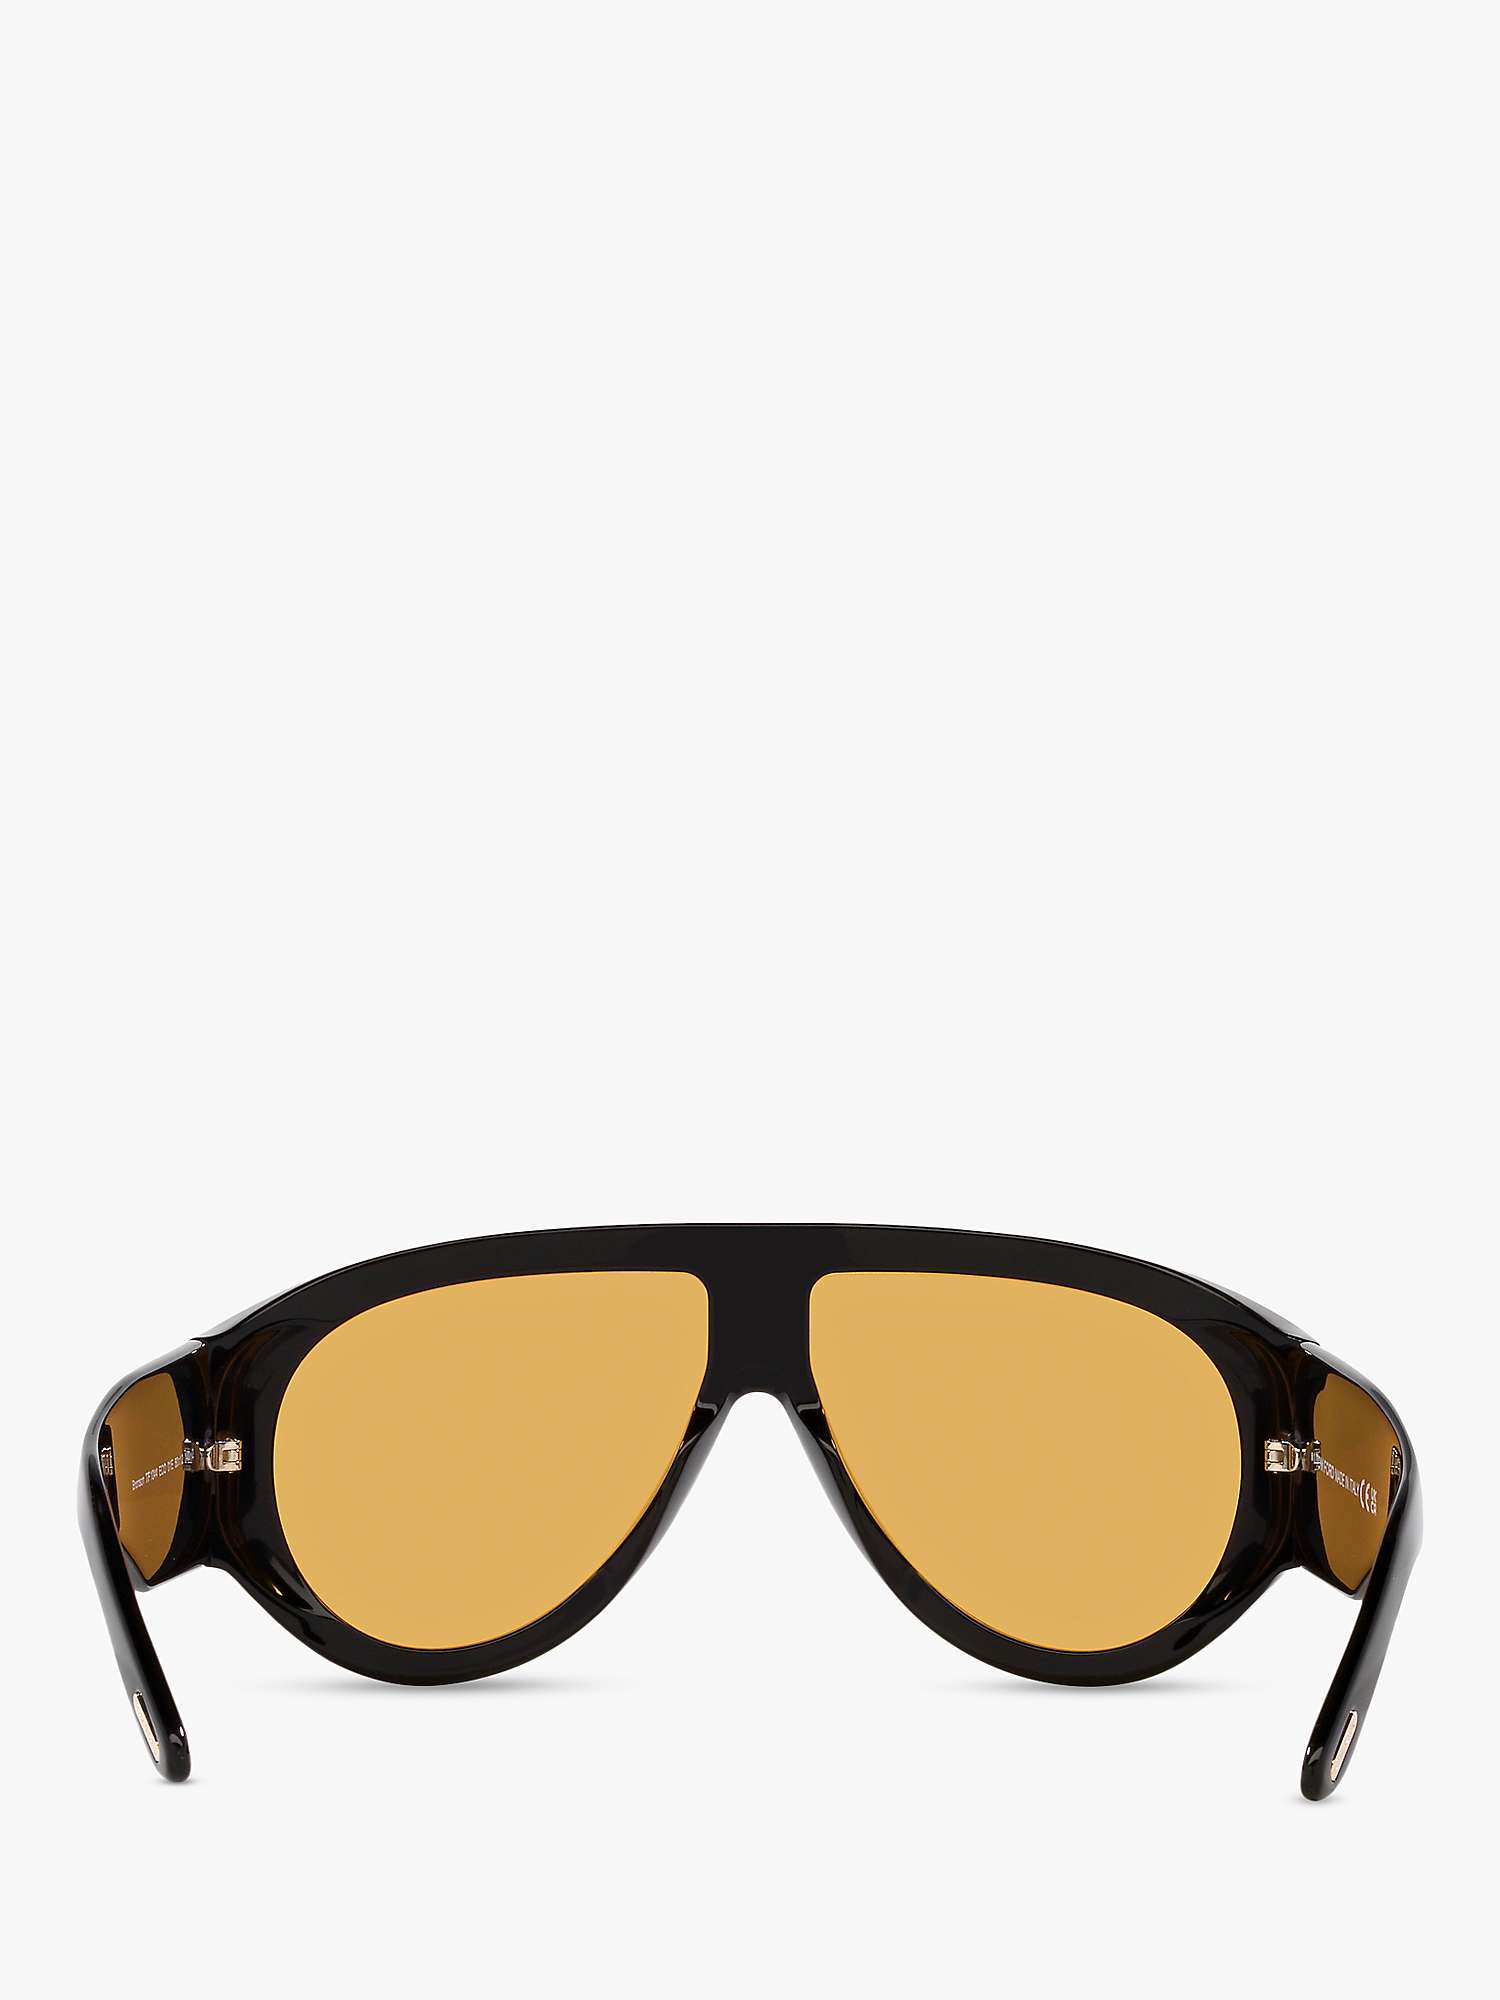 Buy TOM FORD FT1044 Men's Aviator Sunglasses, Shiny Black/Yellow Online at johnlewis.com